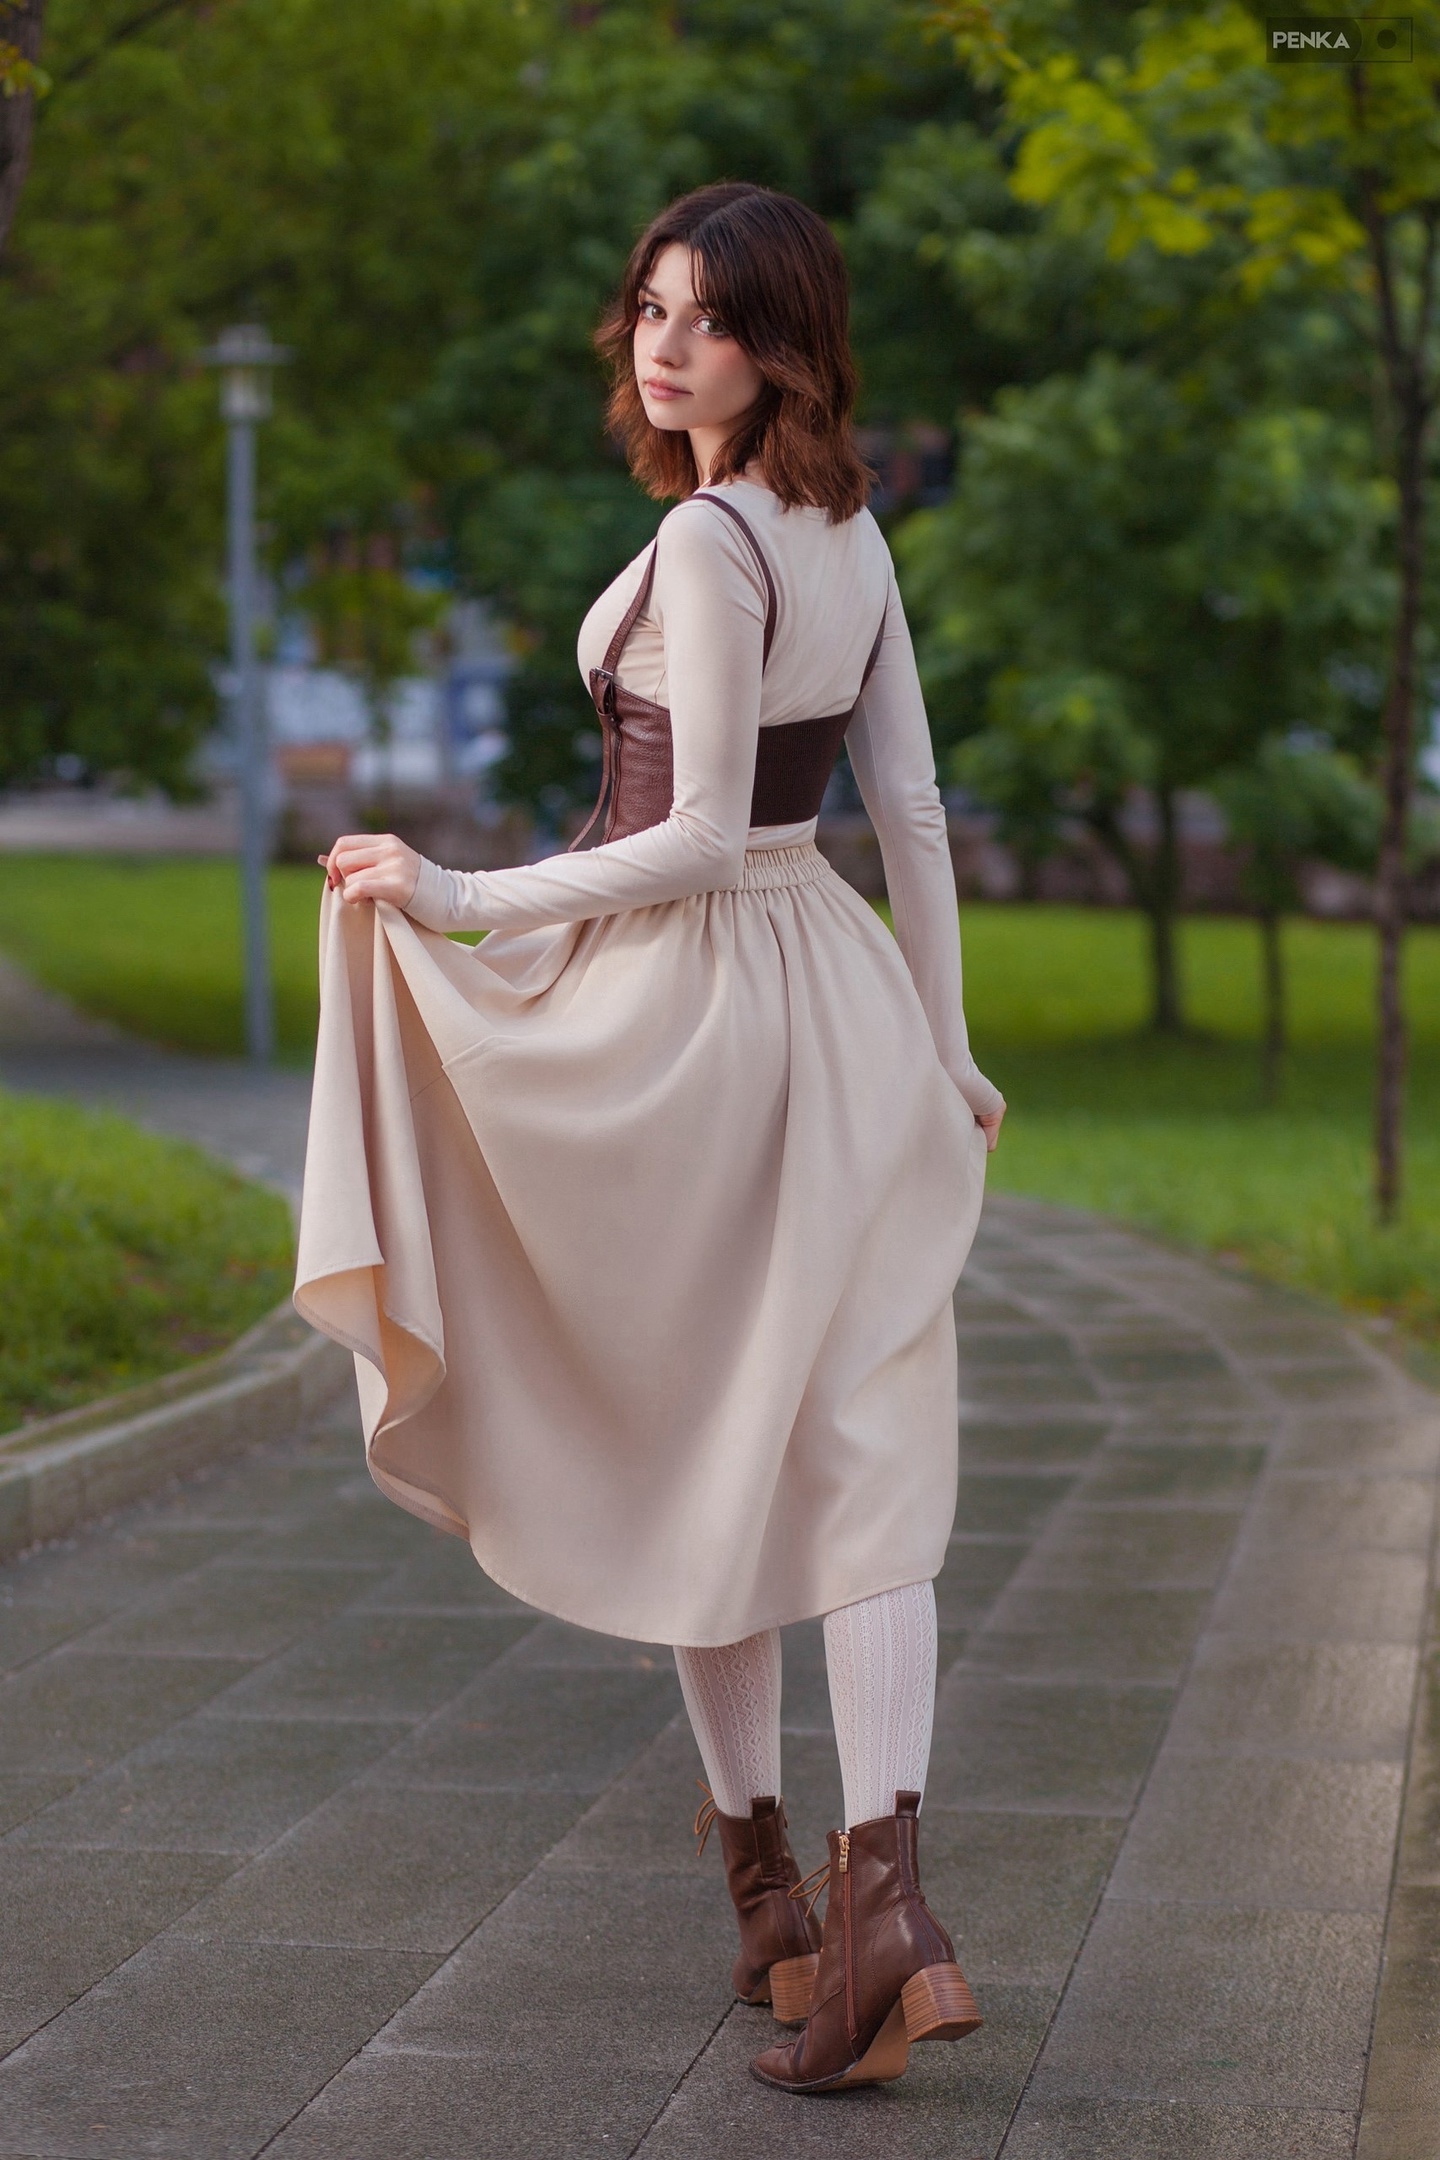 Penka Rui Women Dress Outdoors Holding Clothes 1440x2160